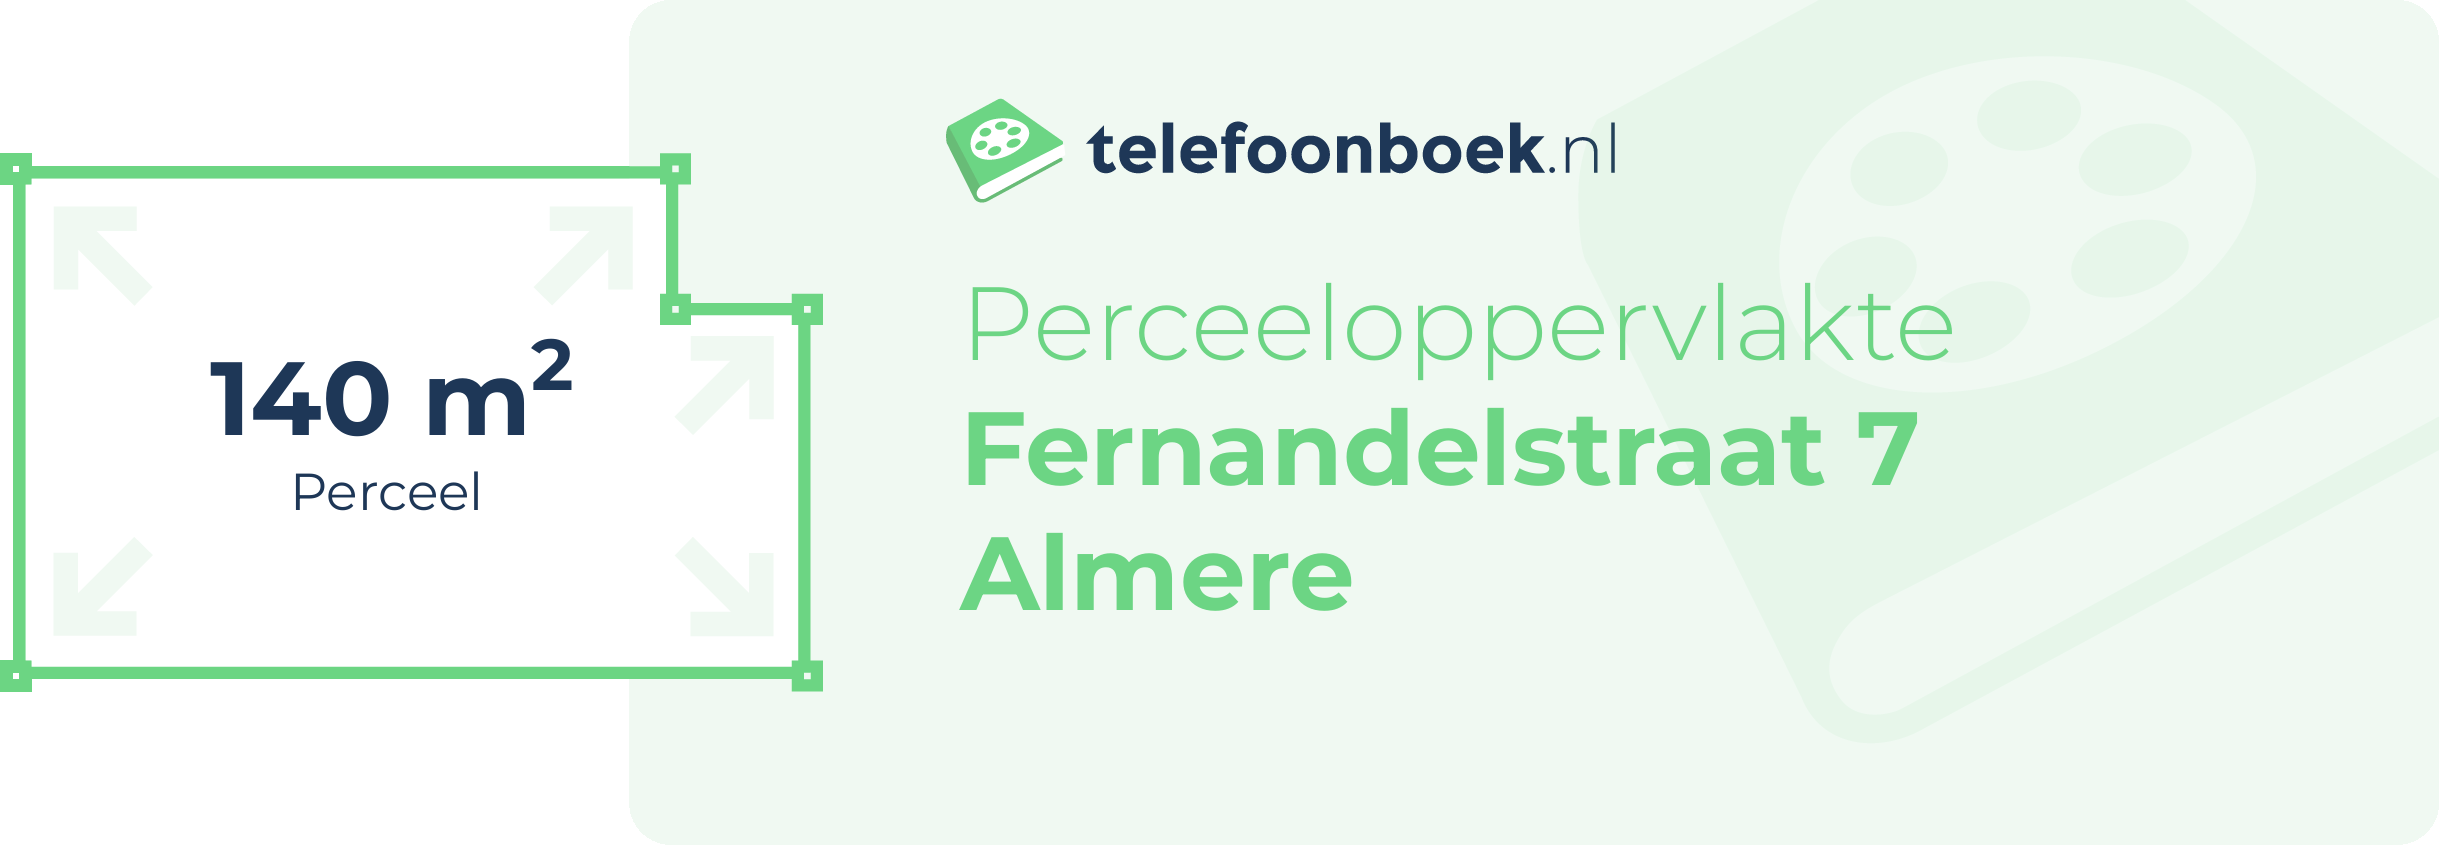 Perceeloppervlakte Fernandelstraat 7 Almere